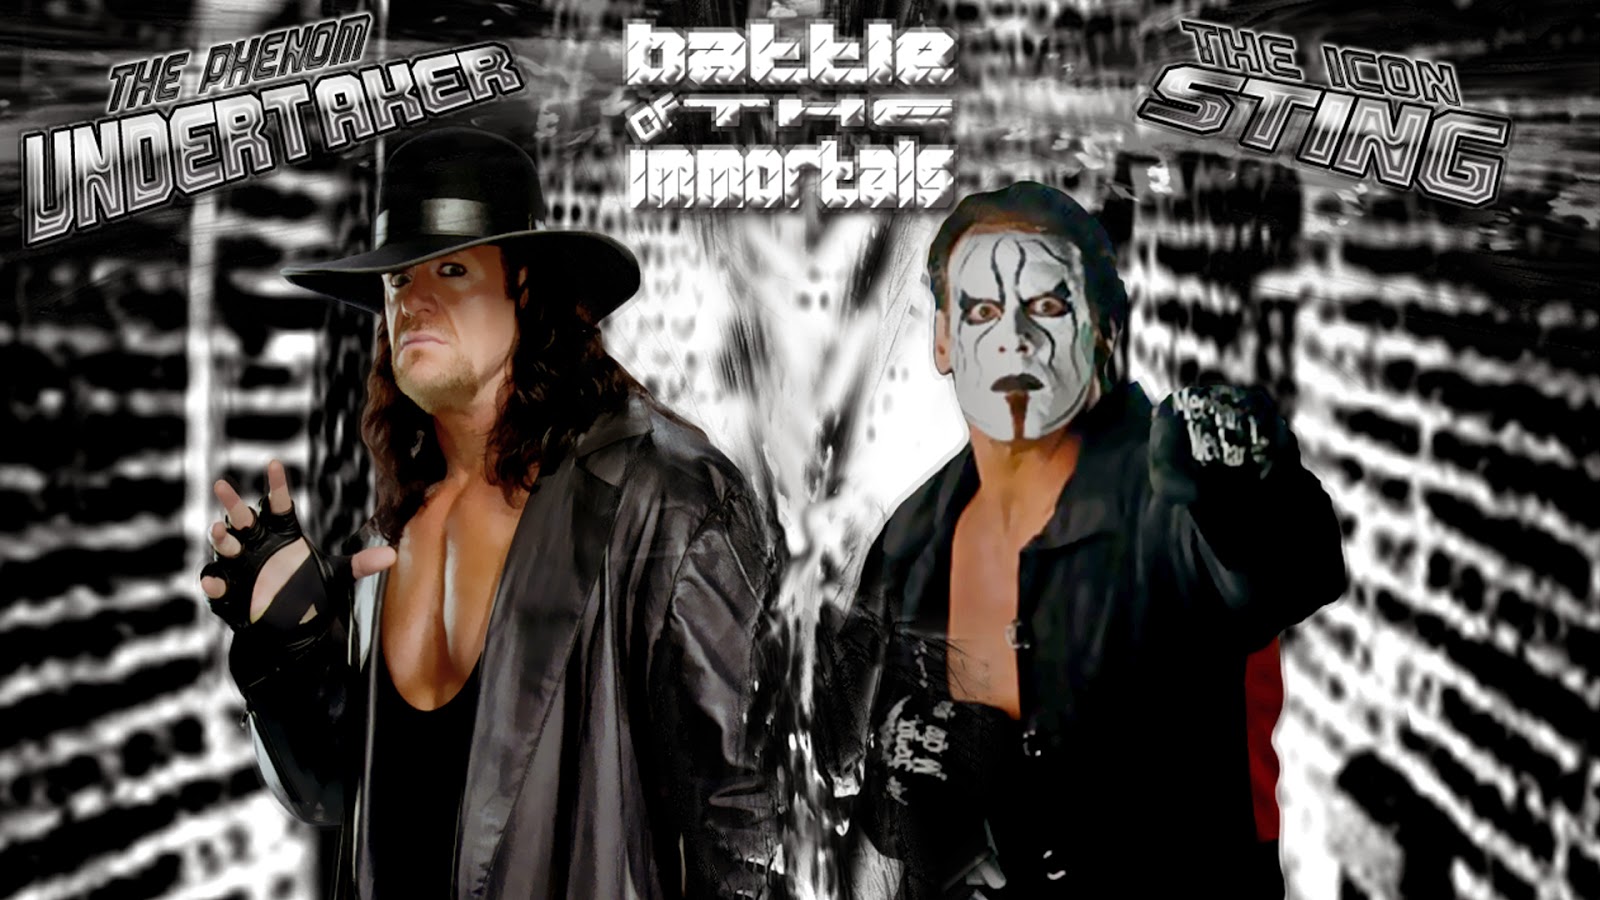 Undertaker Vs Sting New HD Wallpaper Wrestling